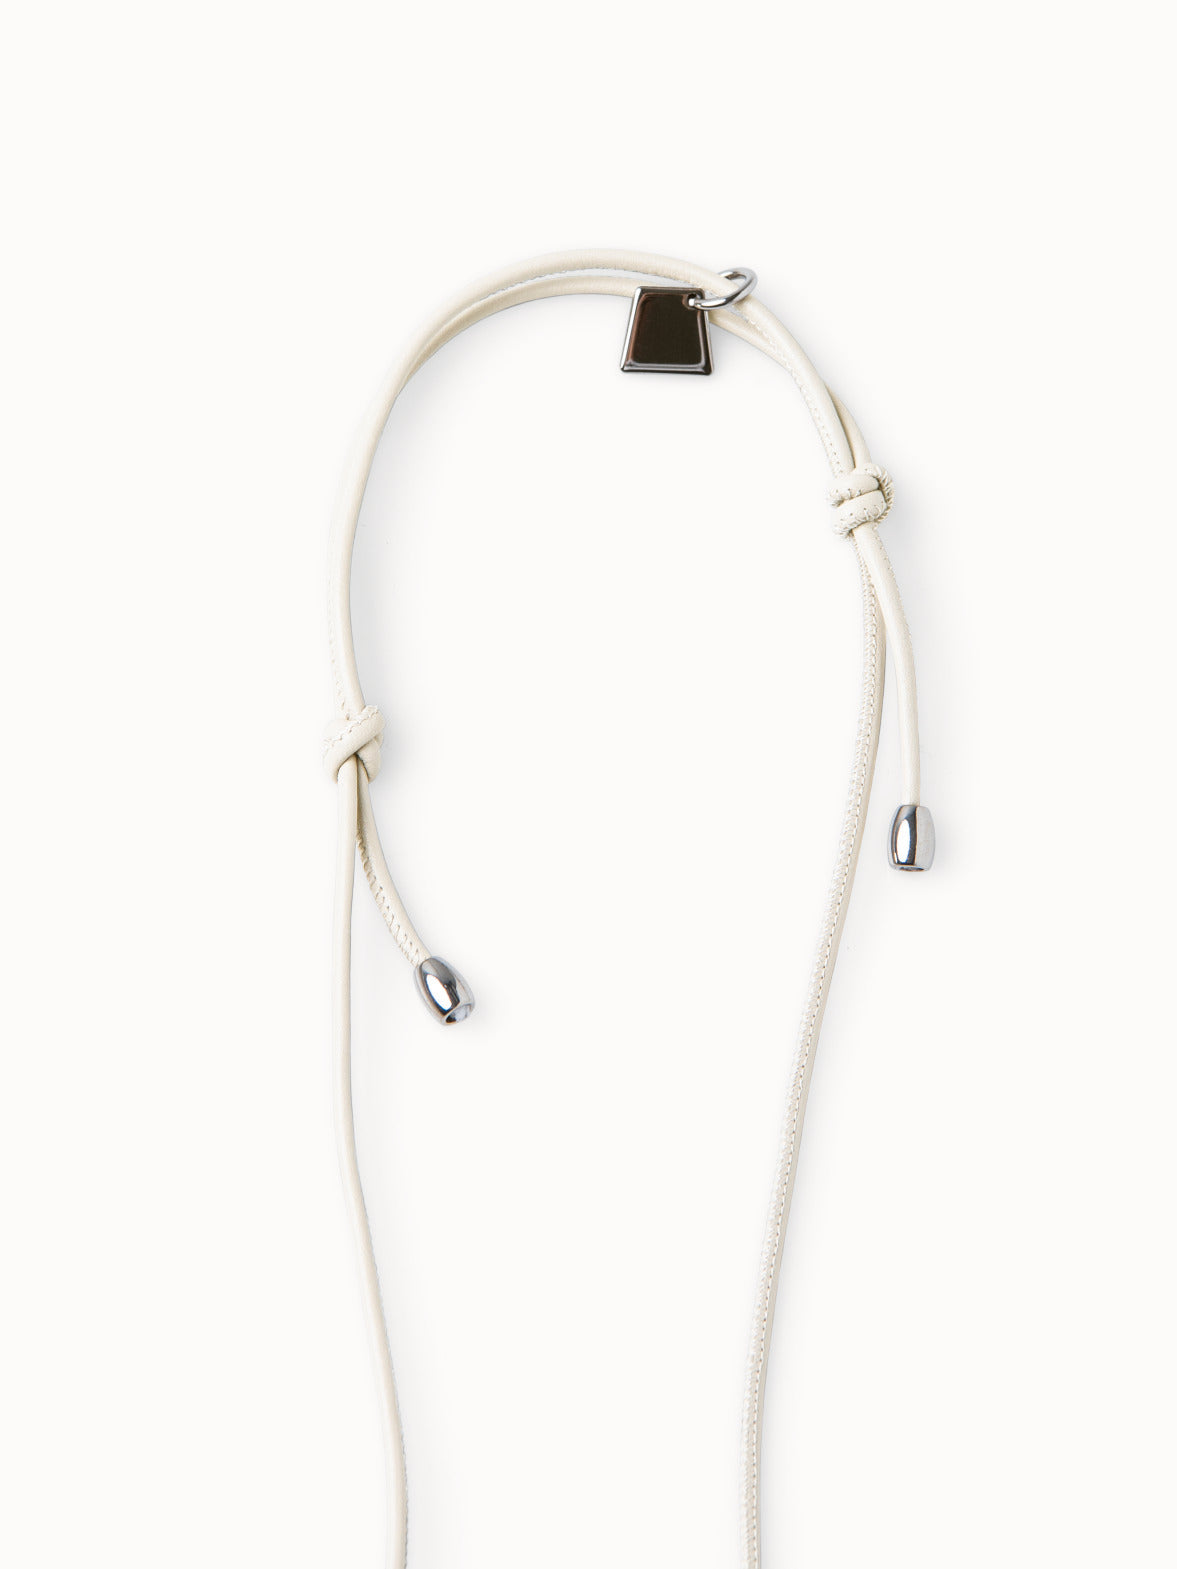 Louis Vuitton Silver Lockit x Doudou Louis Bracelet, Black, One Size